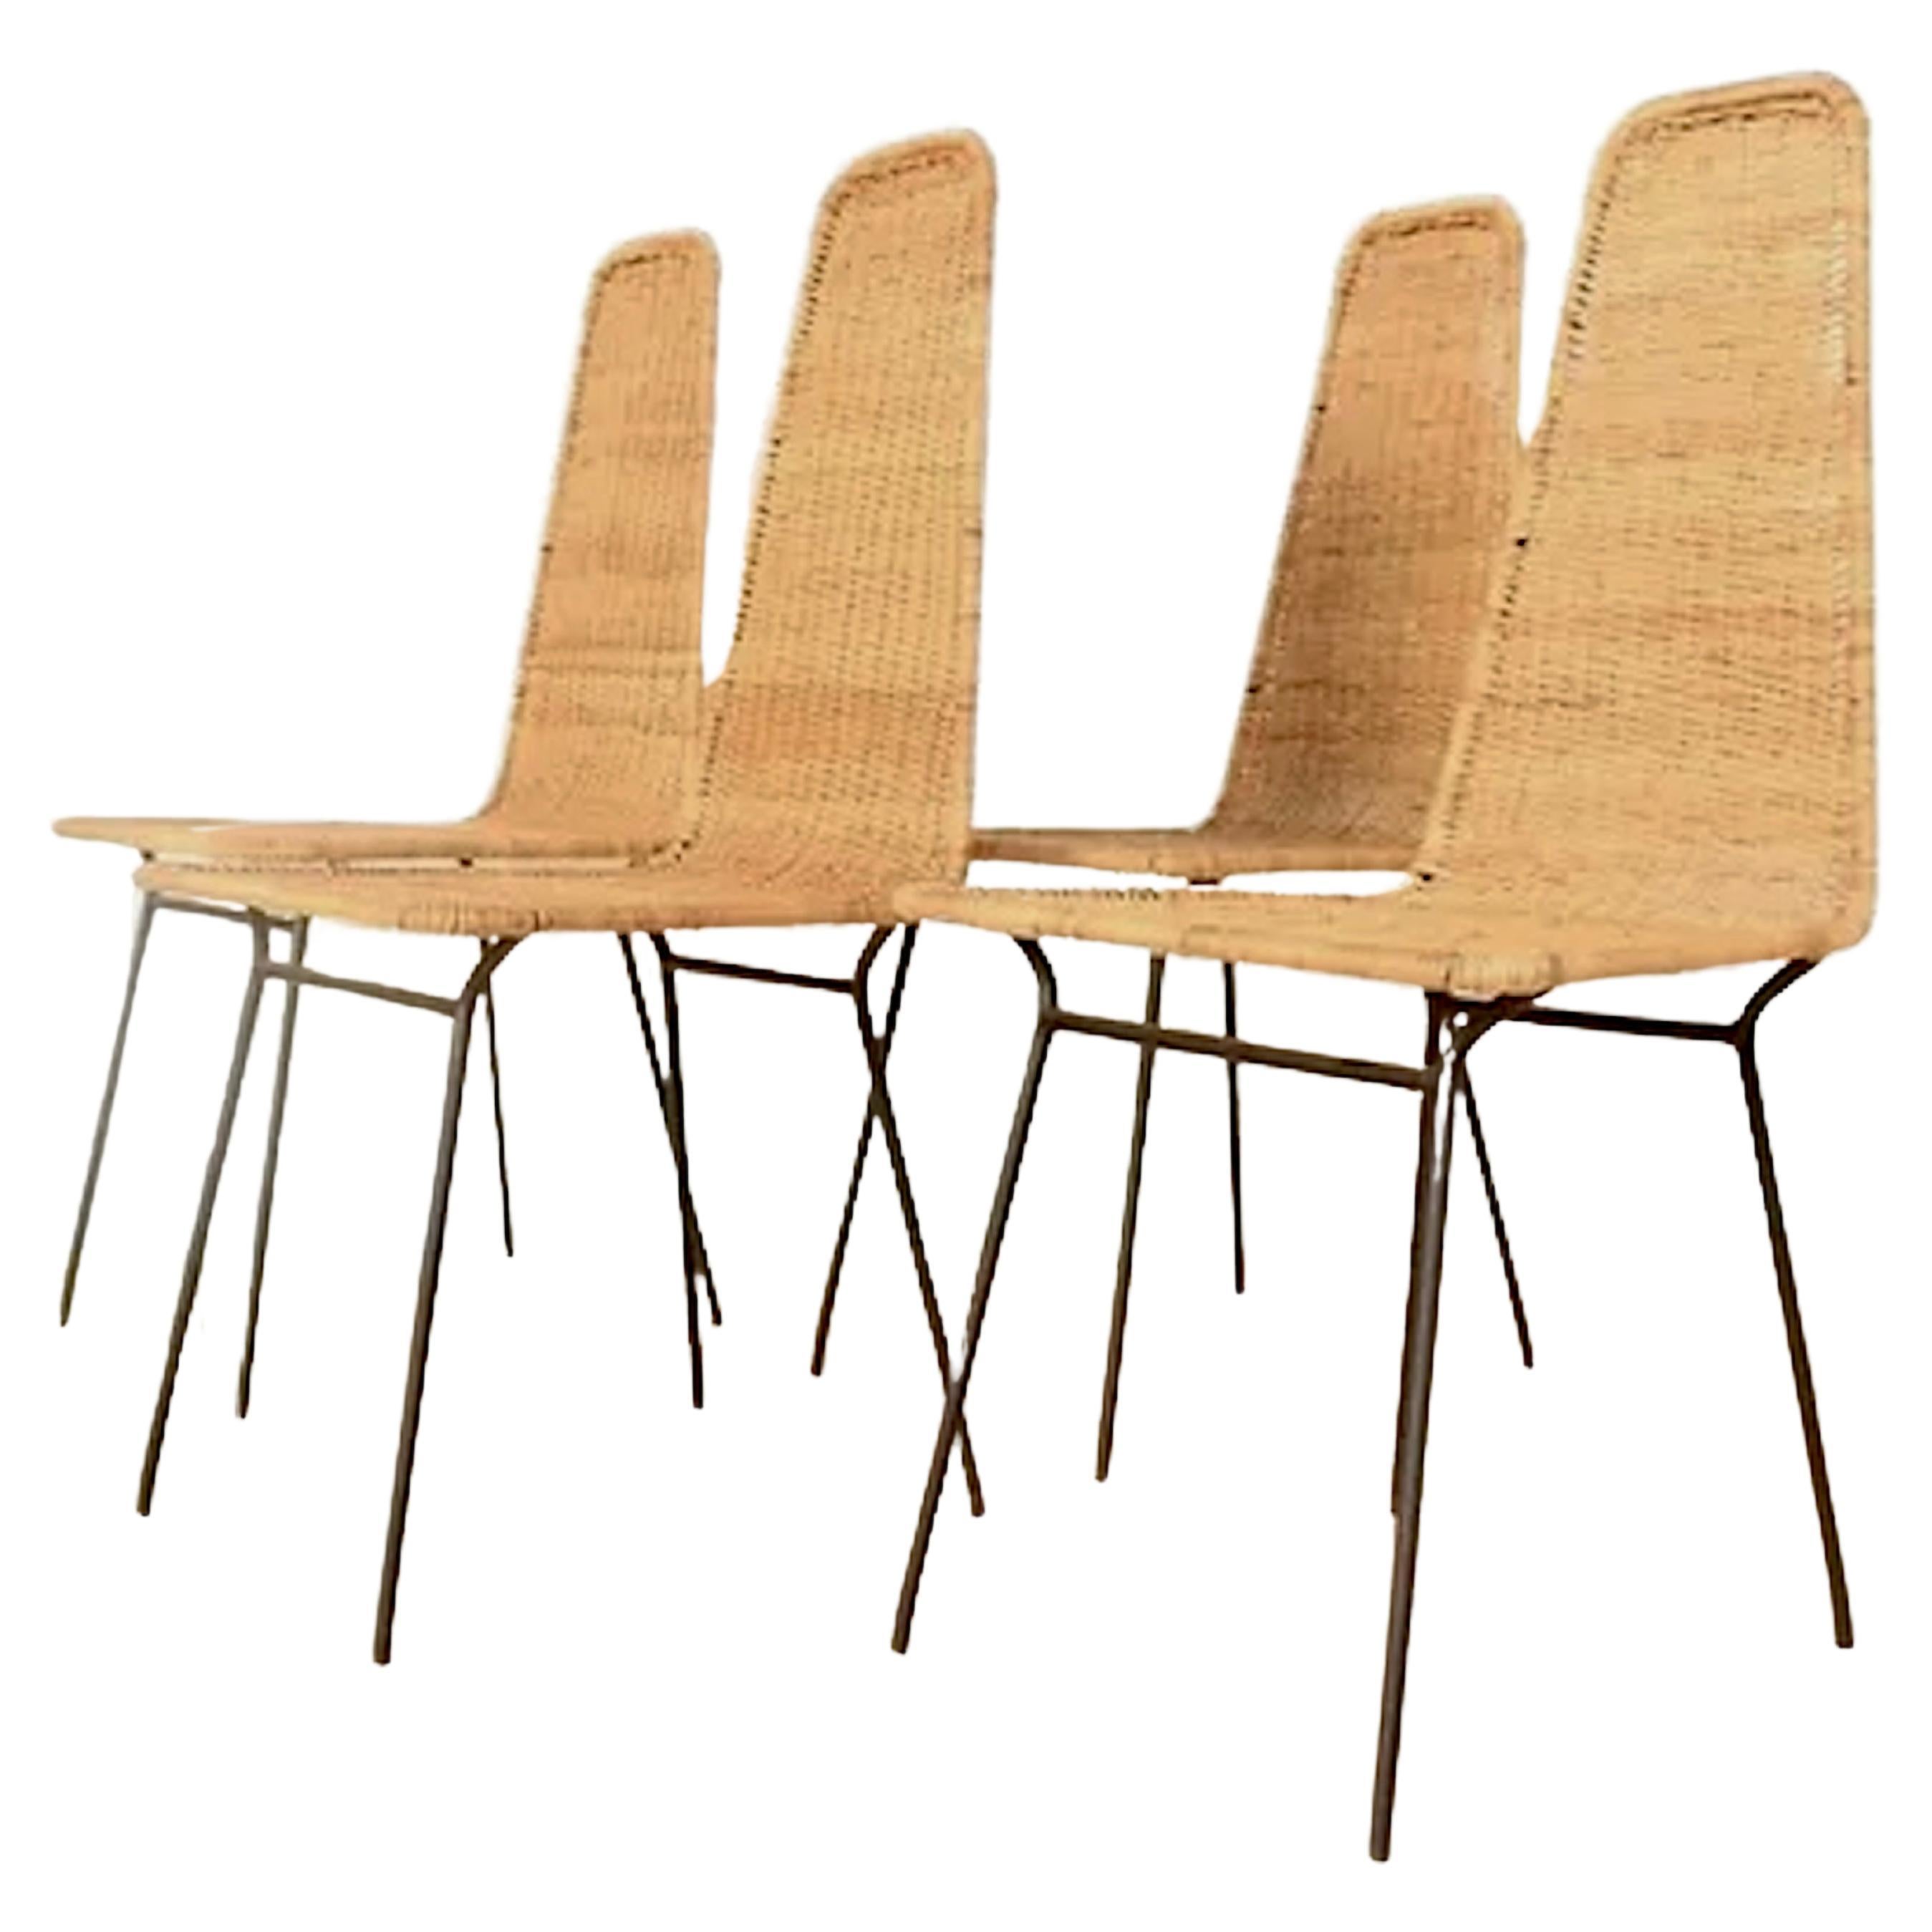 Carlo Hauner. Suite of 4 Rattan chairs, c. 1950. Metal and rattan